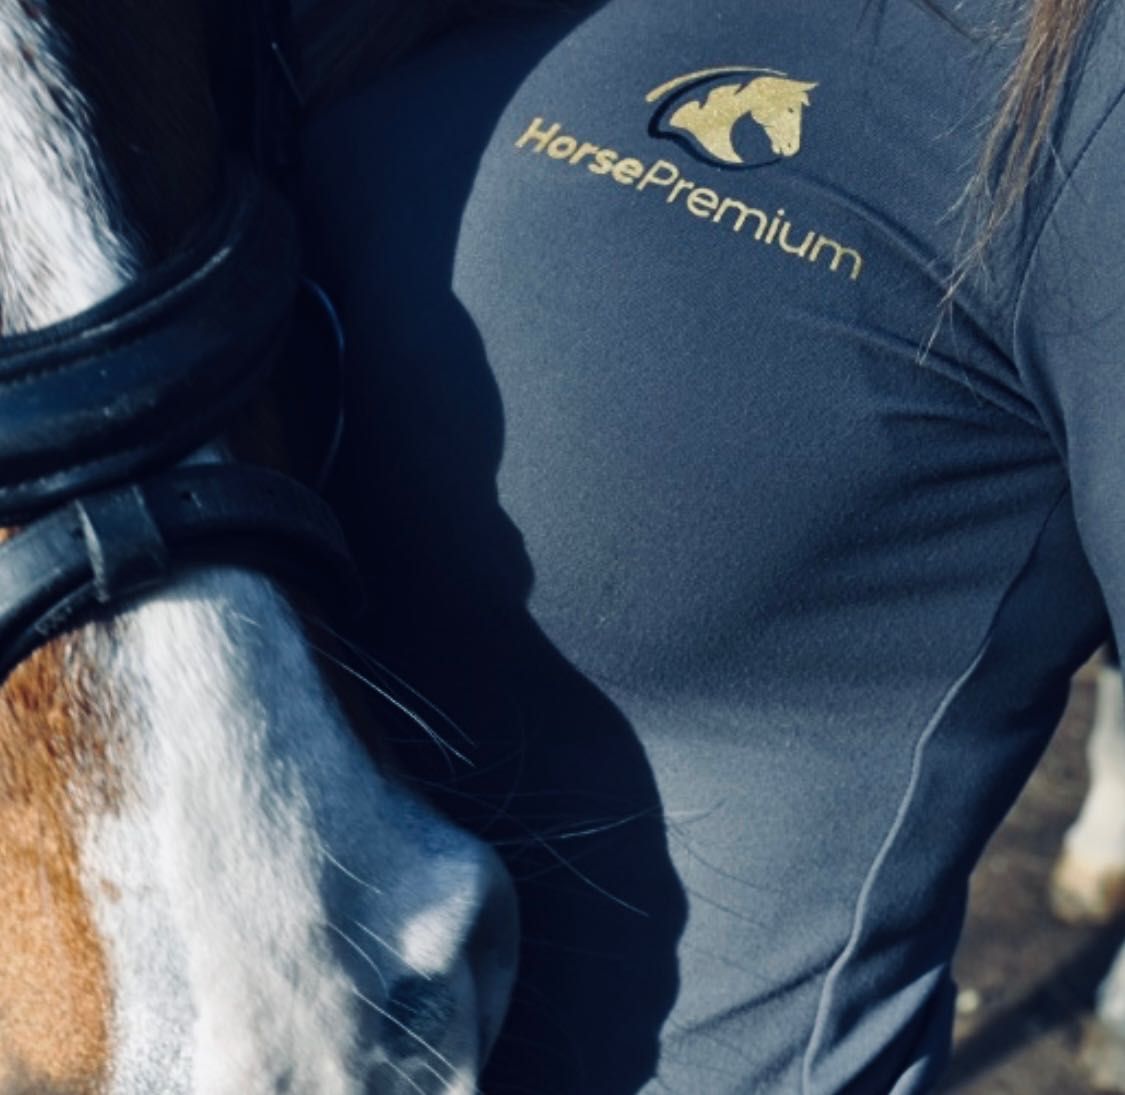 Koszulka termo + czaprak Horse Premium zestaw prezentowy